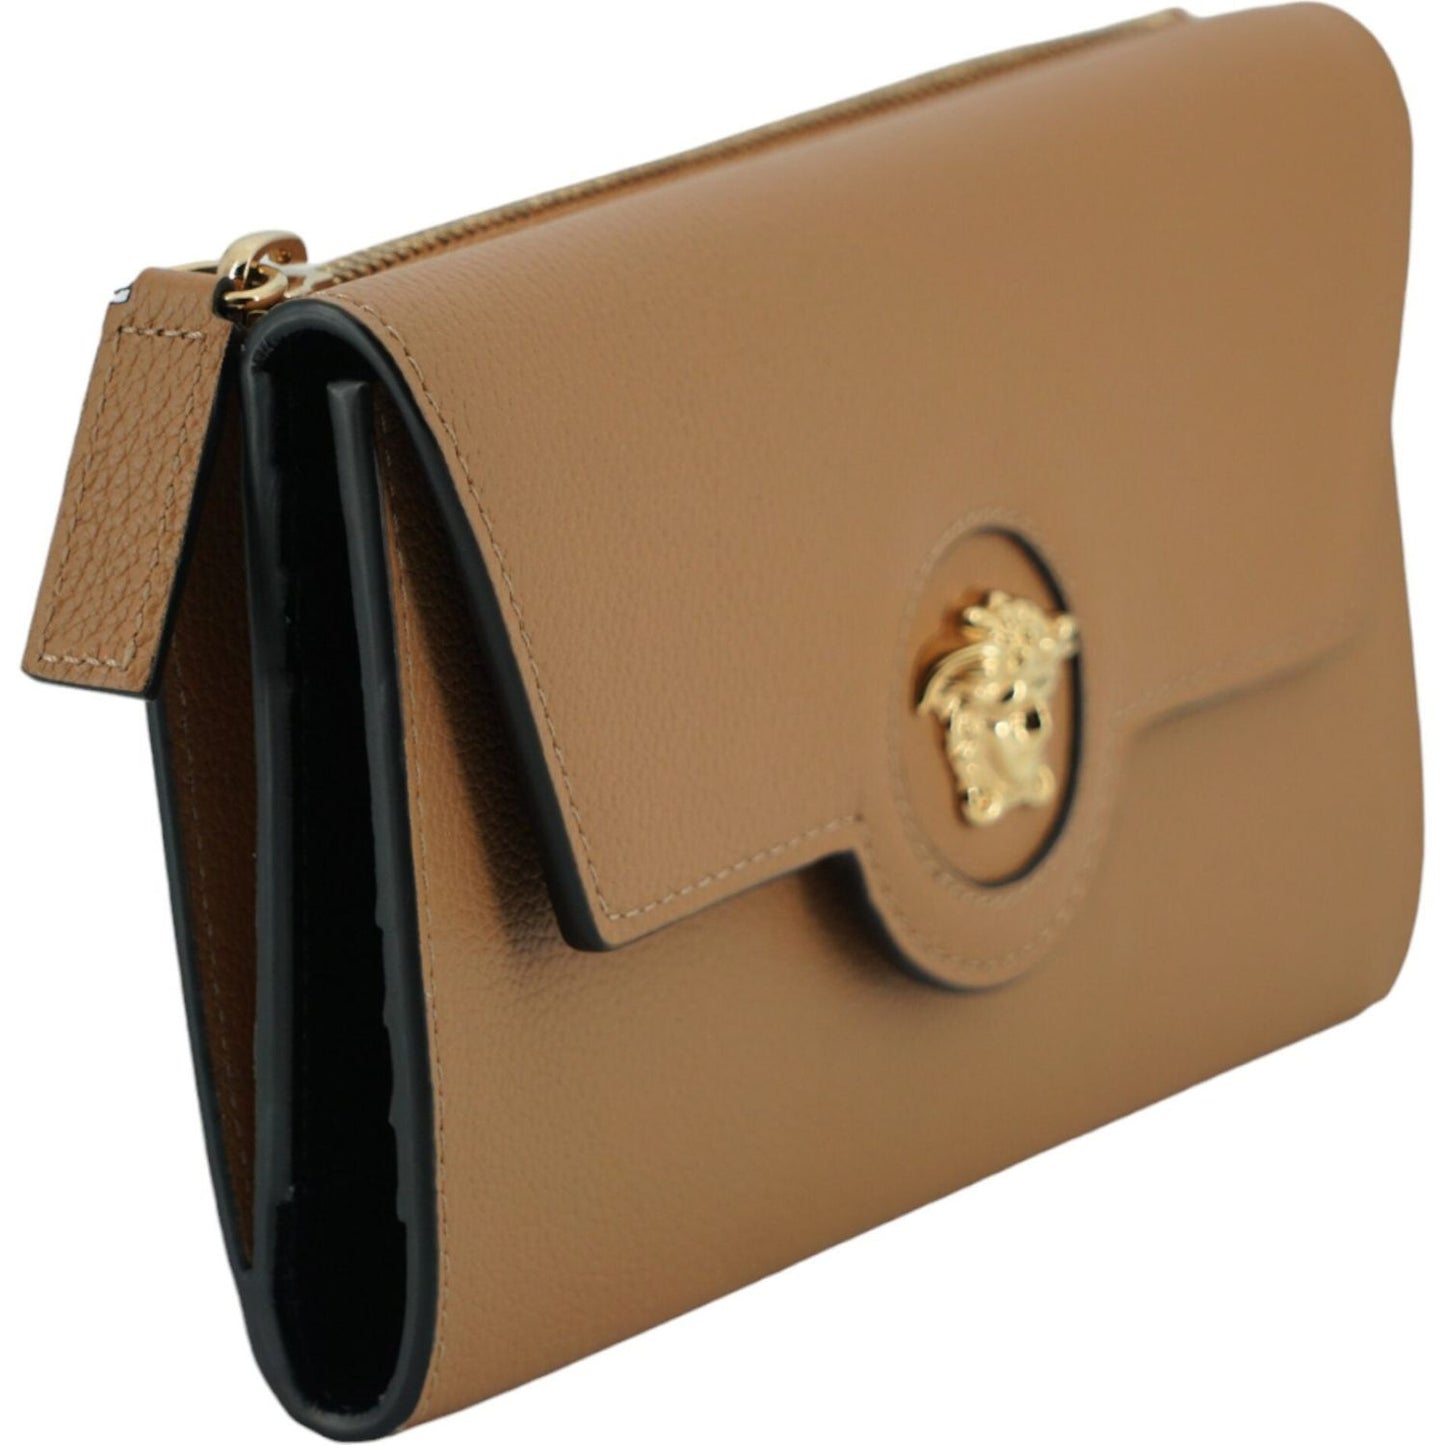 Versace Brown Calf Leather Medusa Wallet brown-calf-leather-medusa-wallet DSC01092-scaled-6118c910-f99.jpg